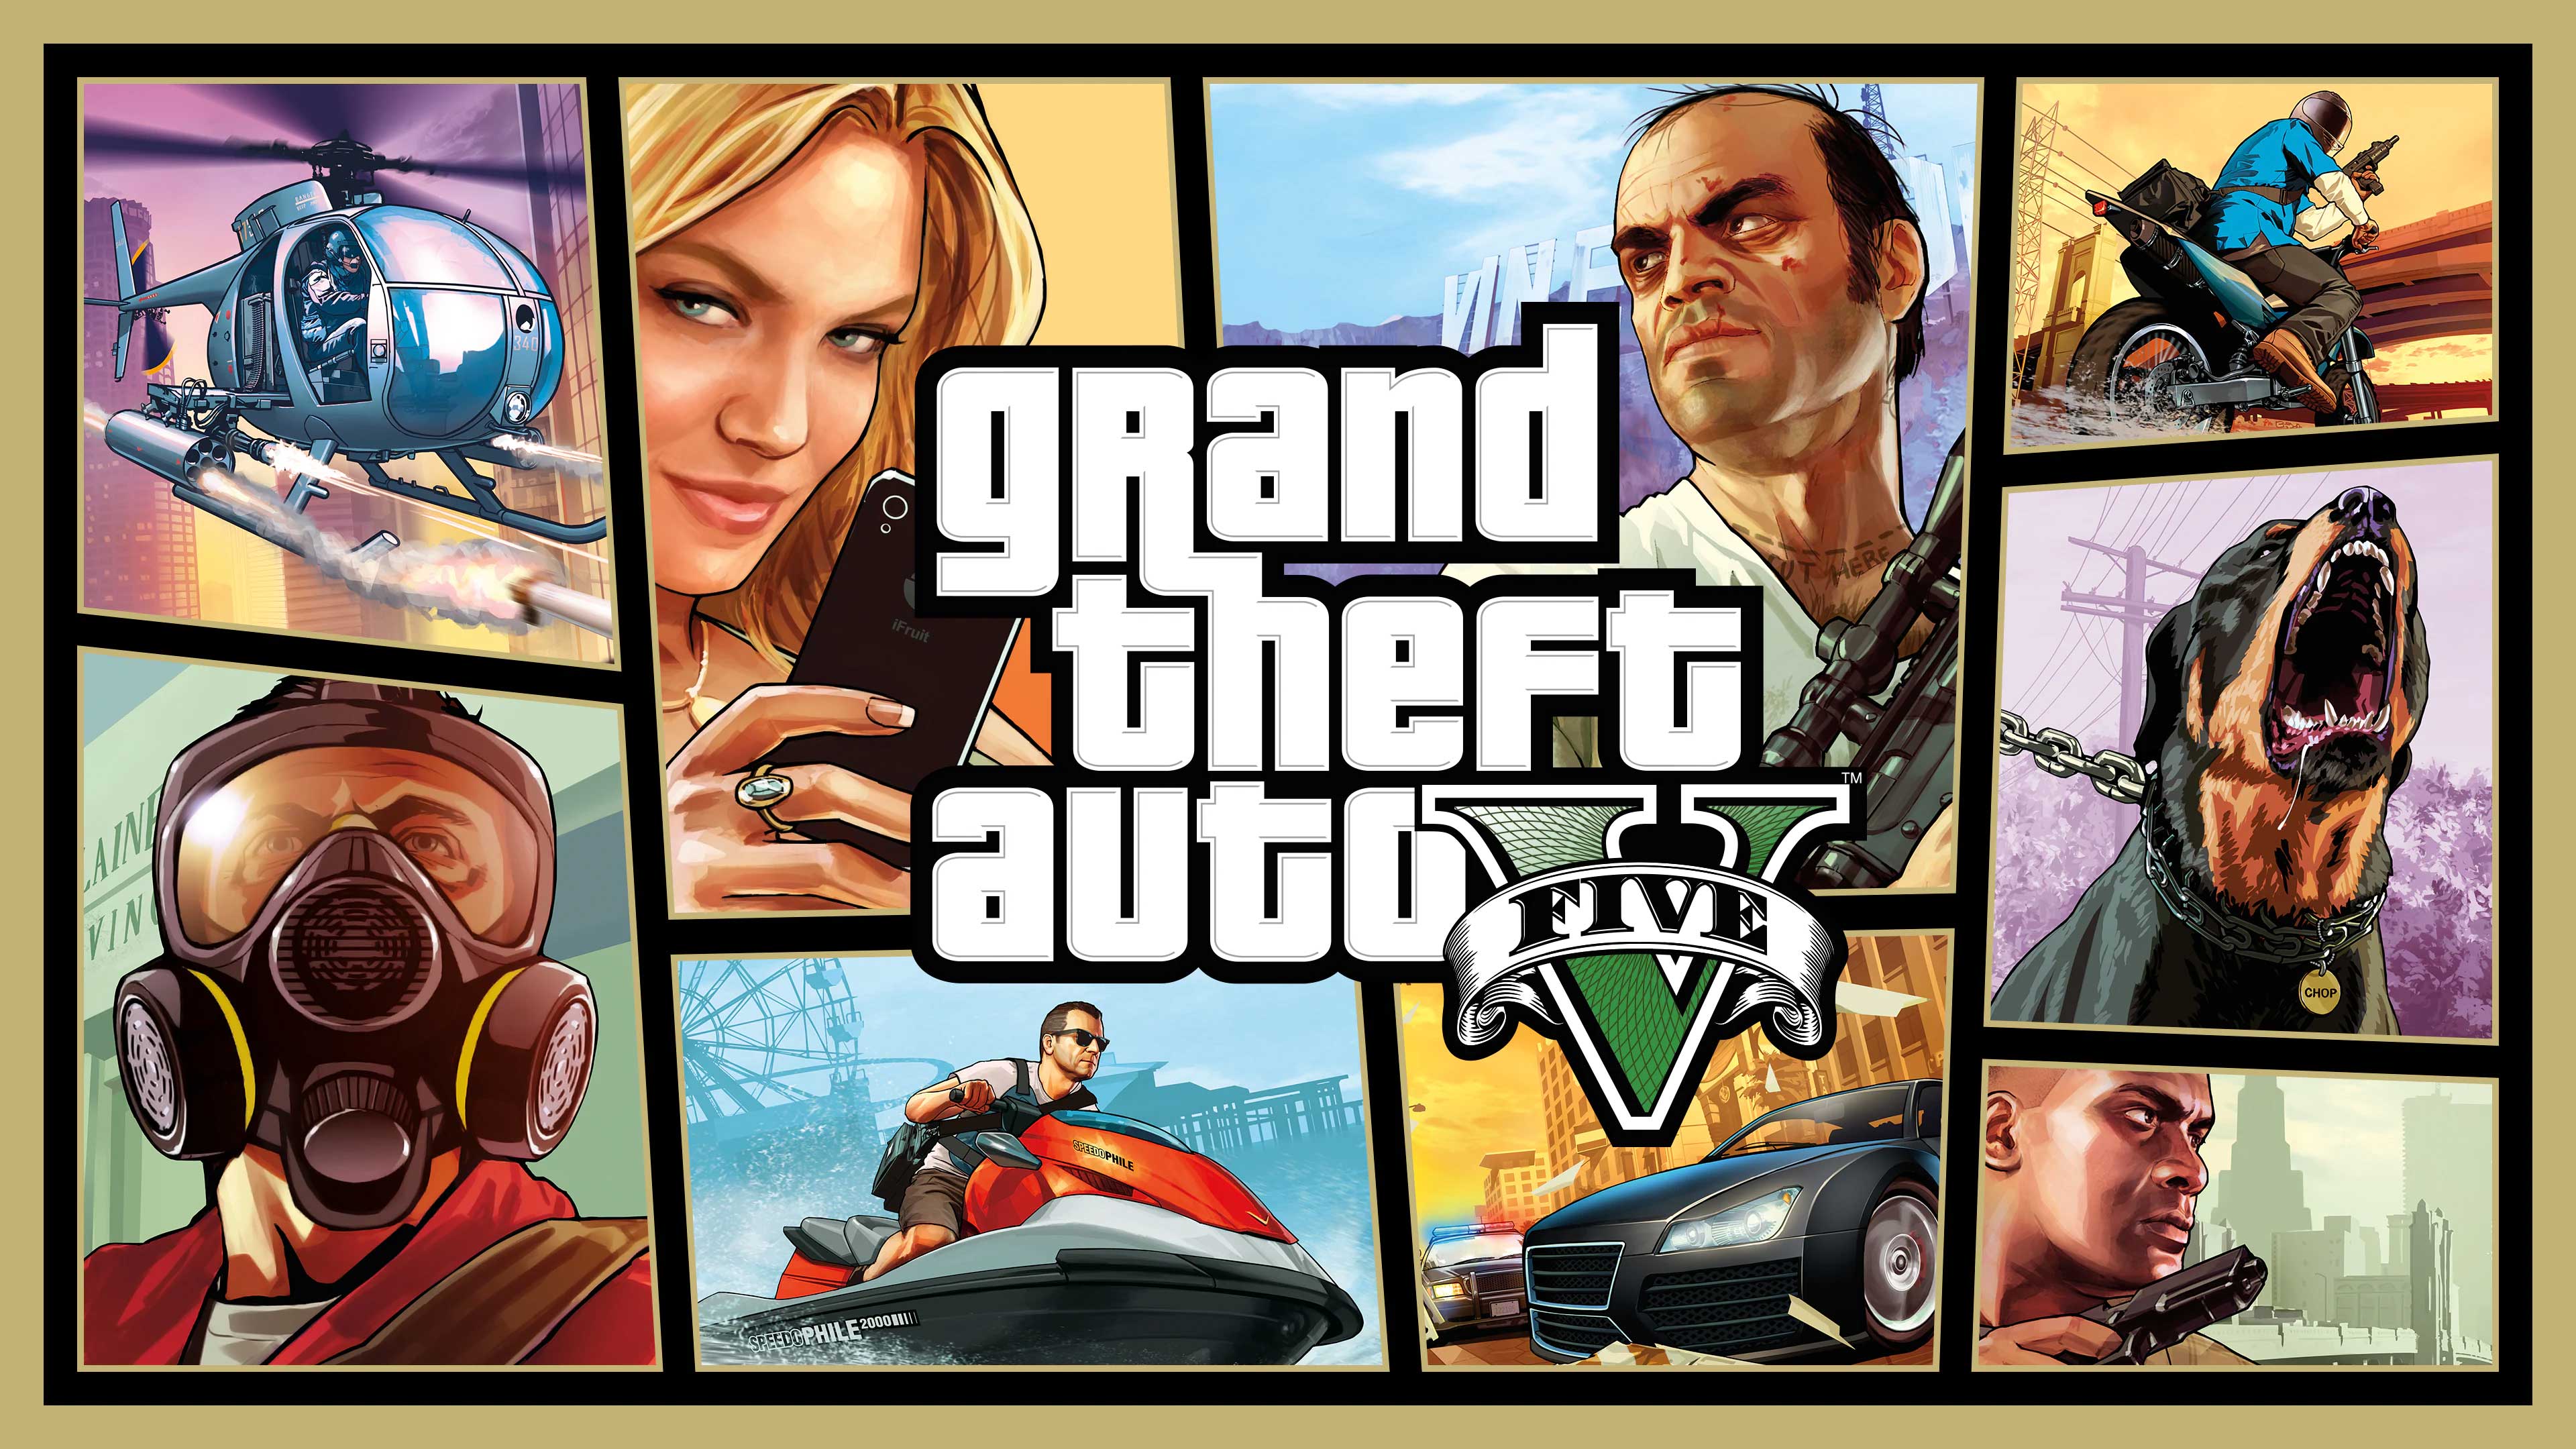 Grand Theft Auto V, Its The Vibes, itsthevibes.com